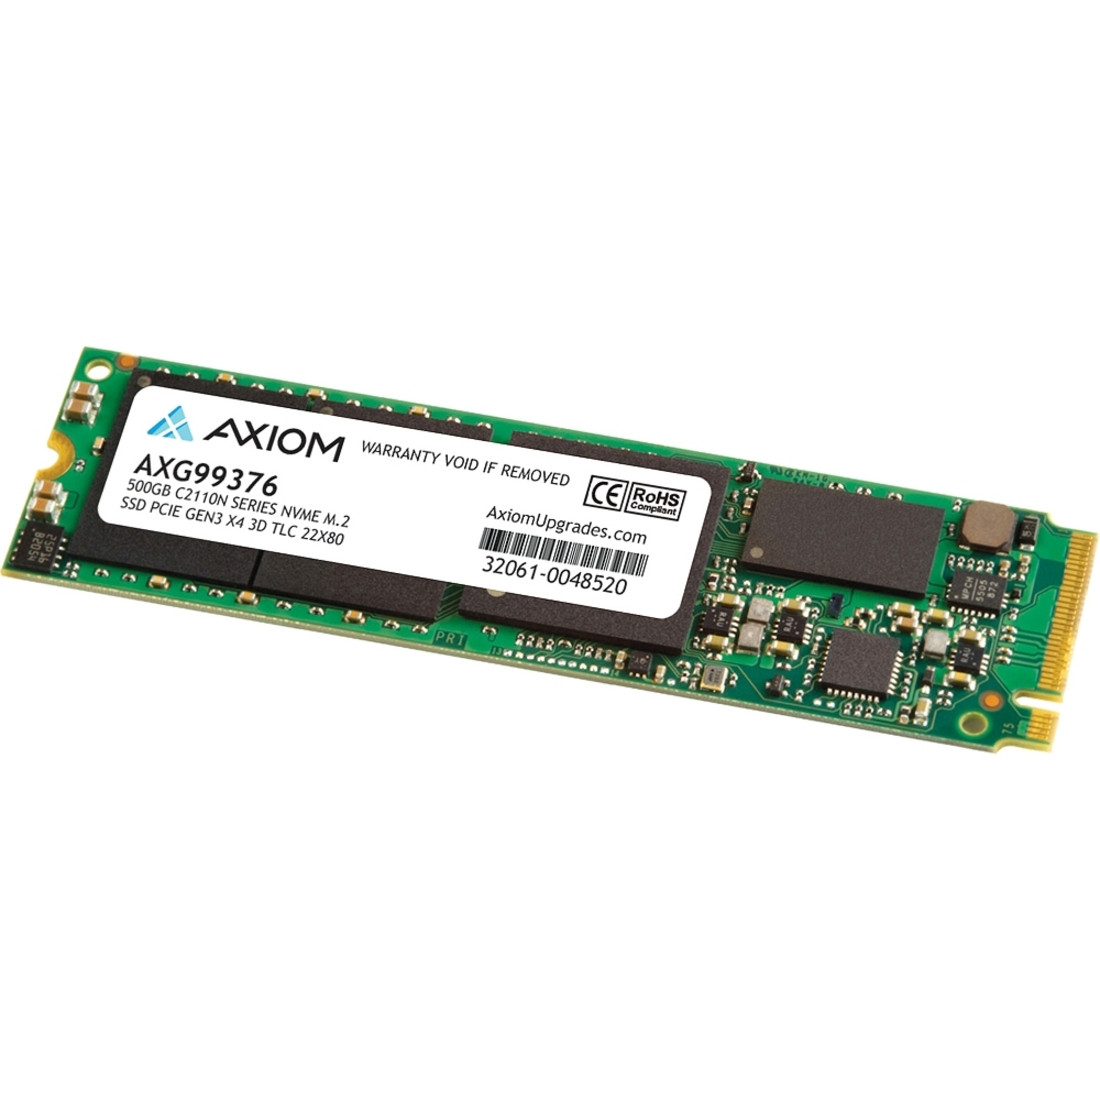 Axiom Memory Solutions 500GB C2110n Series PCIe Gen3x4 NVMe M.2 TLC SSDTAA Compliant0.609 DWPD303 TB TBW2105 MB/s Maximum Read Transfer Rate3 Yea… AXG99376